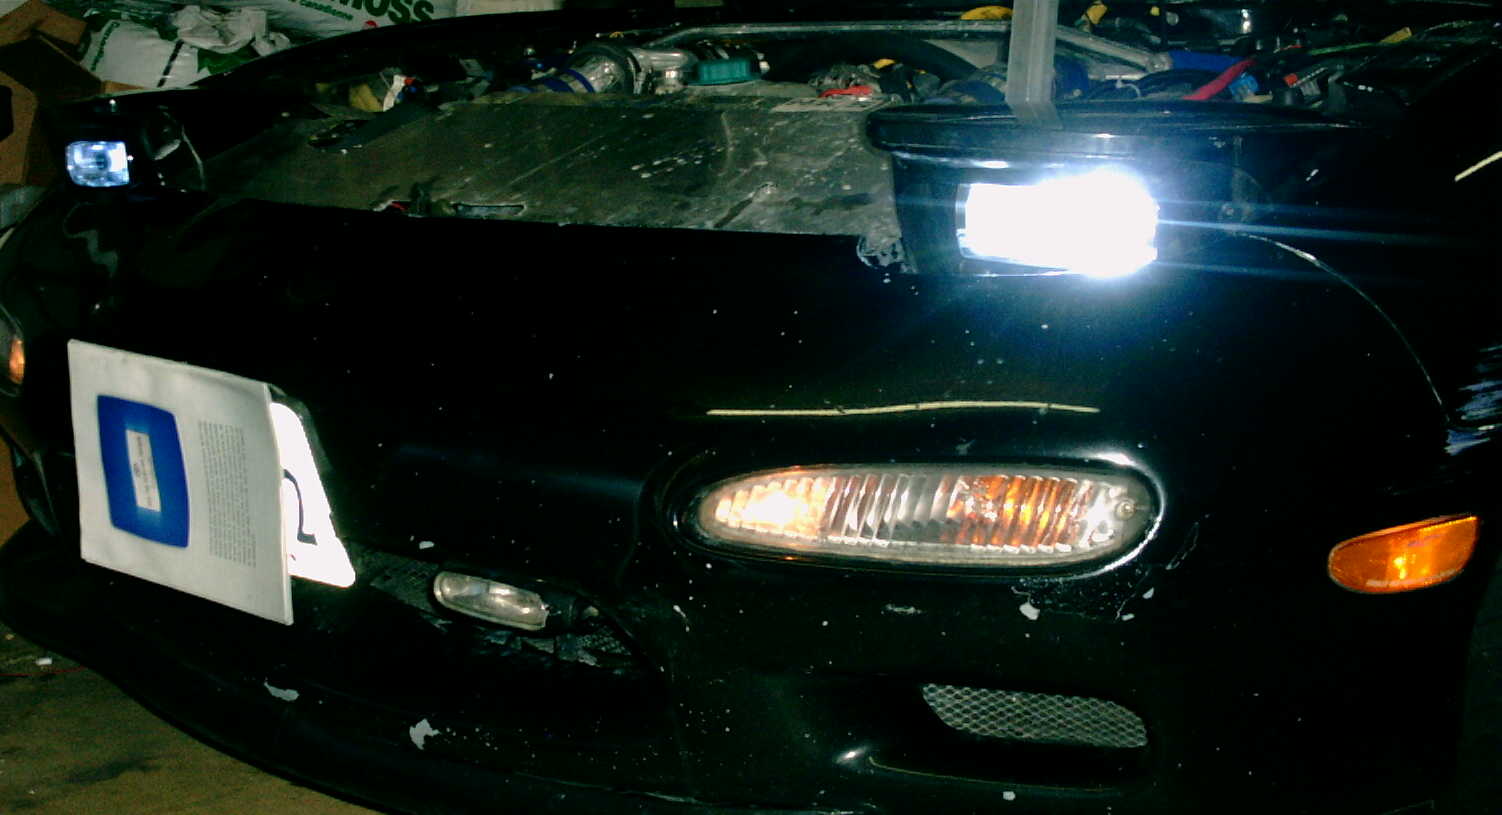 half height pop up headlights -  - Mazda RX7 Forum